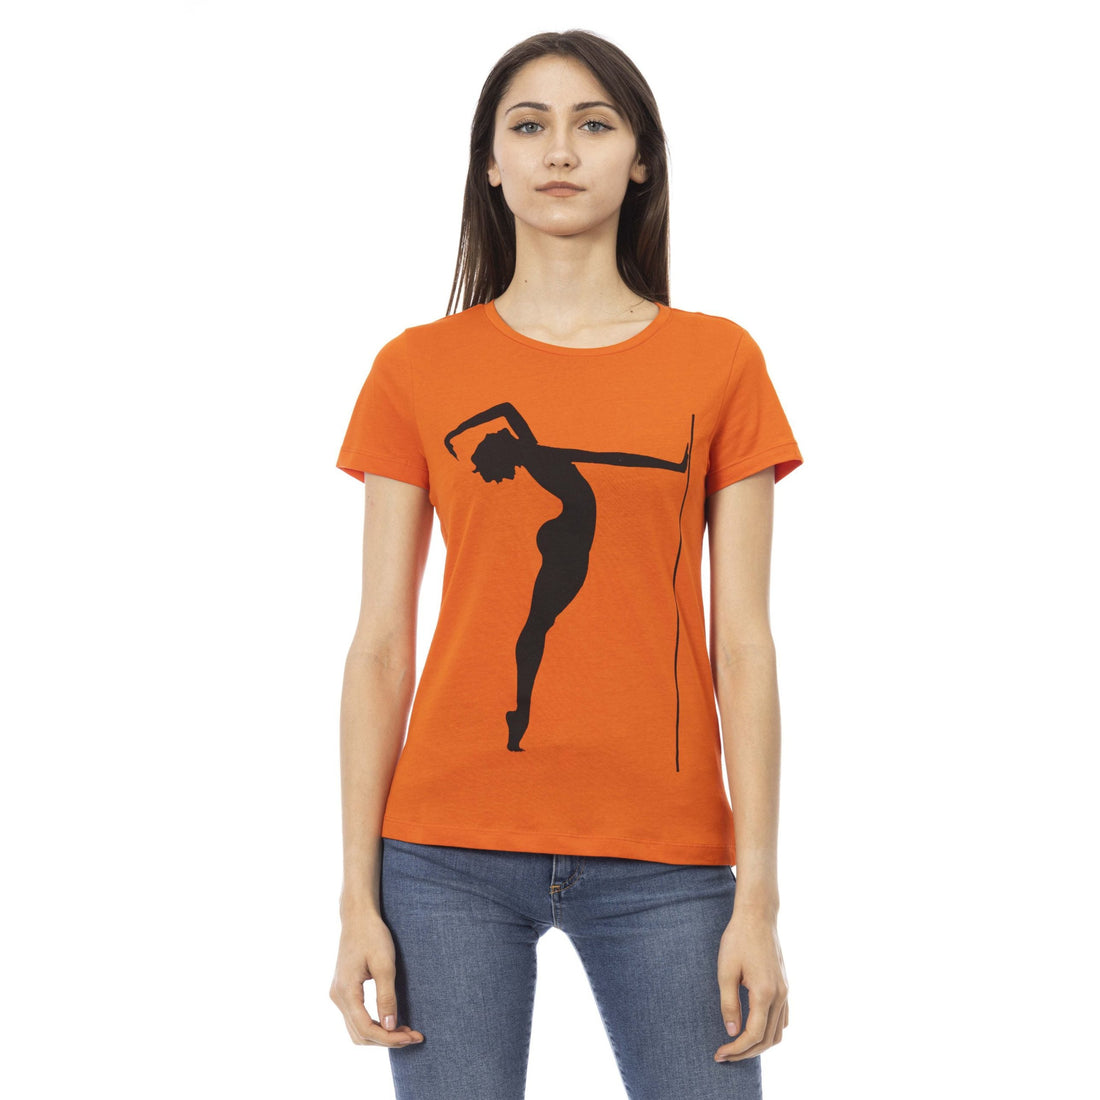 Trussardi Action Orange Cotton Tops & T-Shirt